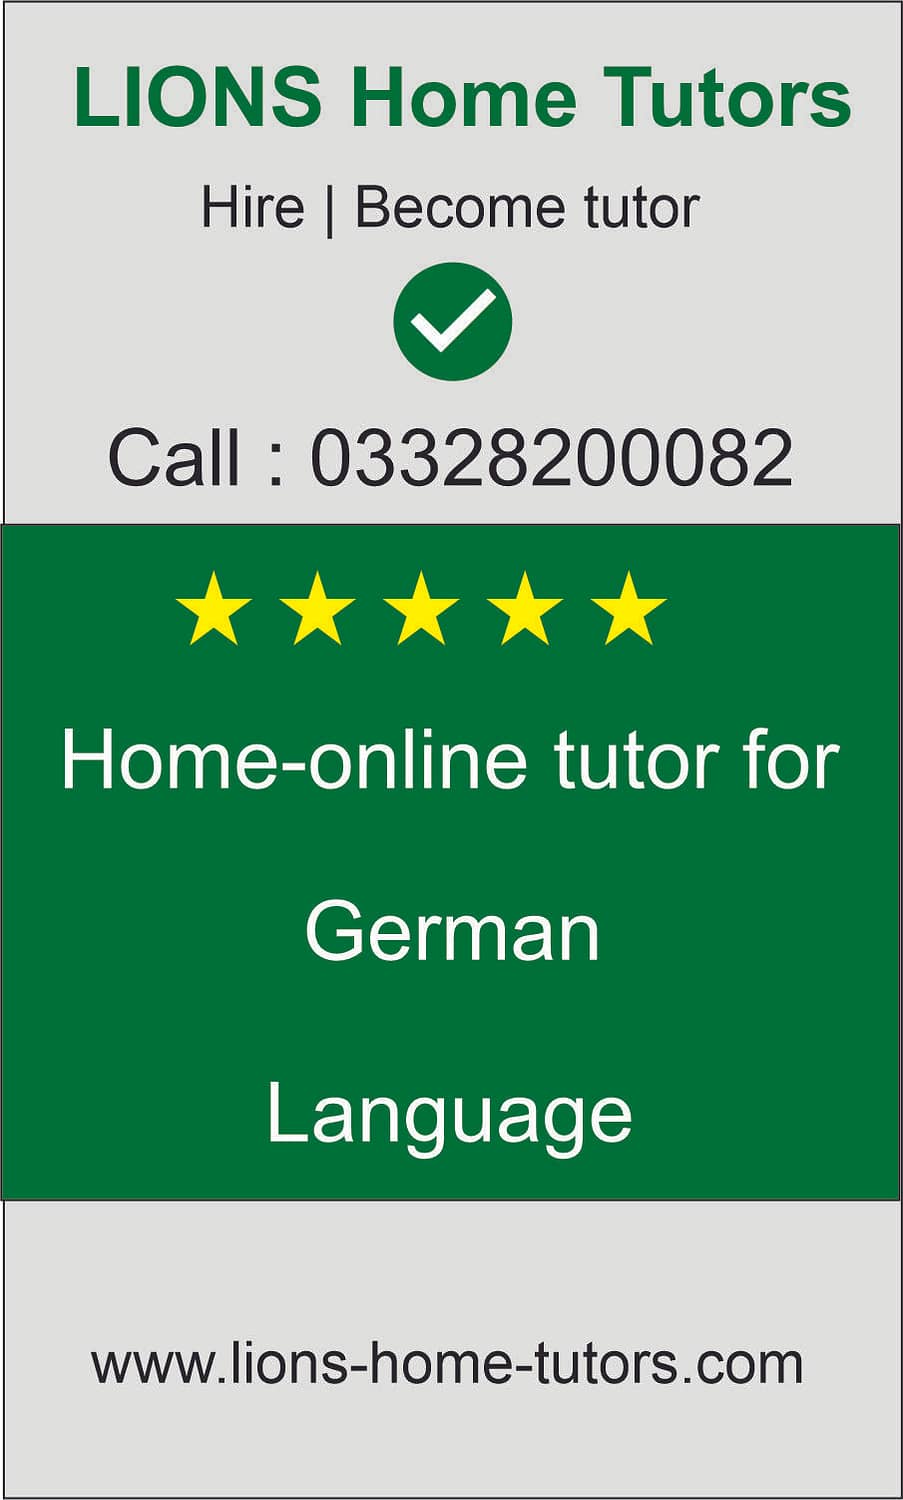 Home-online tutor for German Language